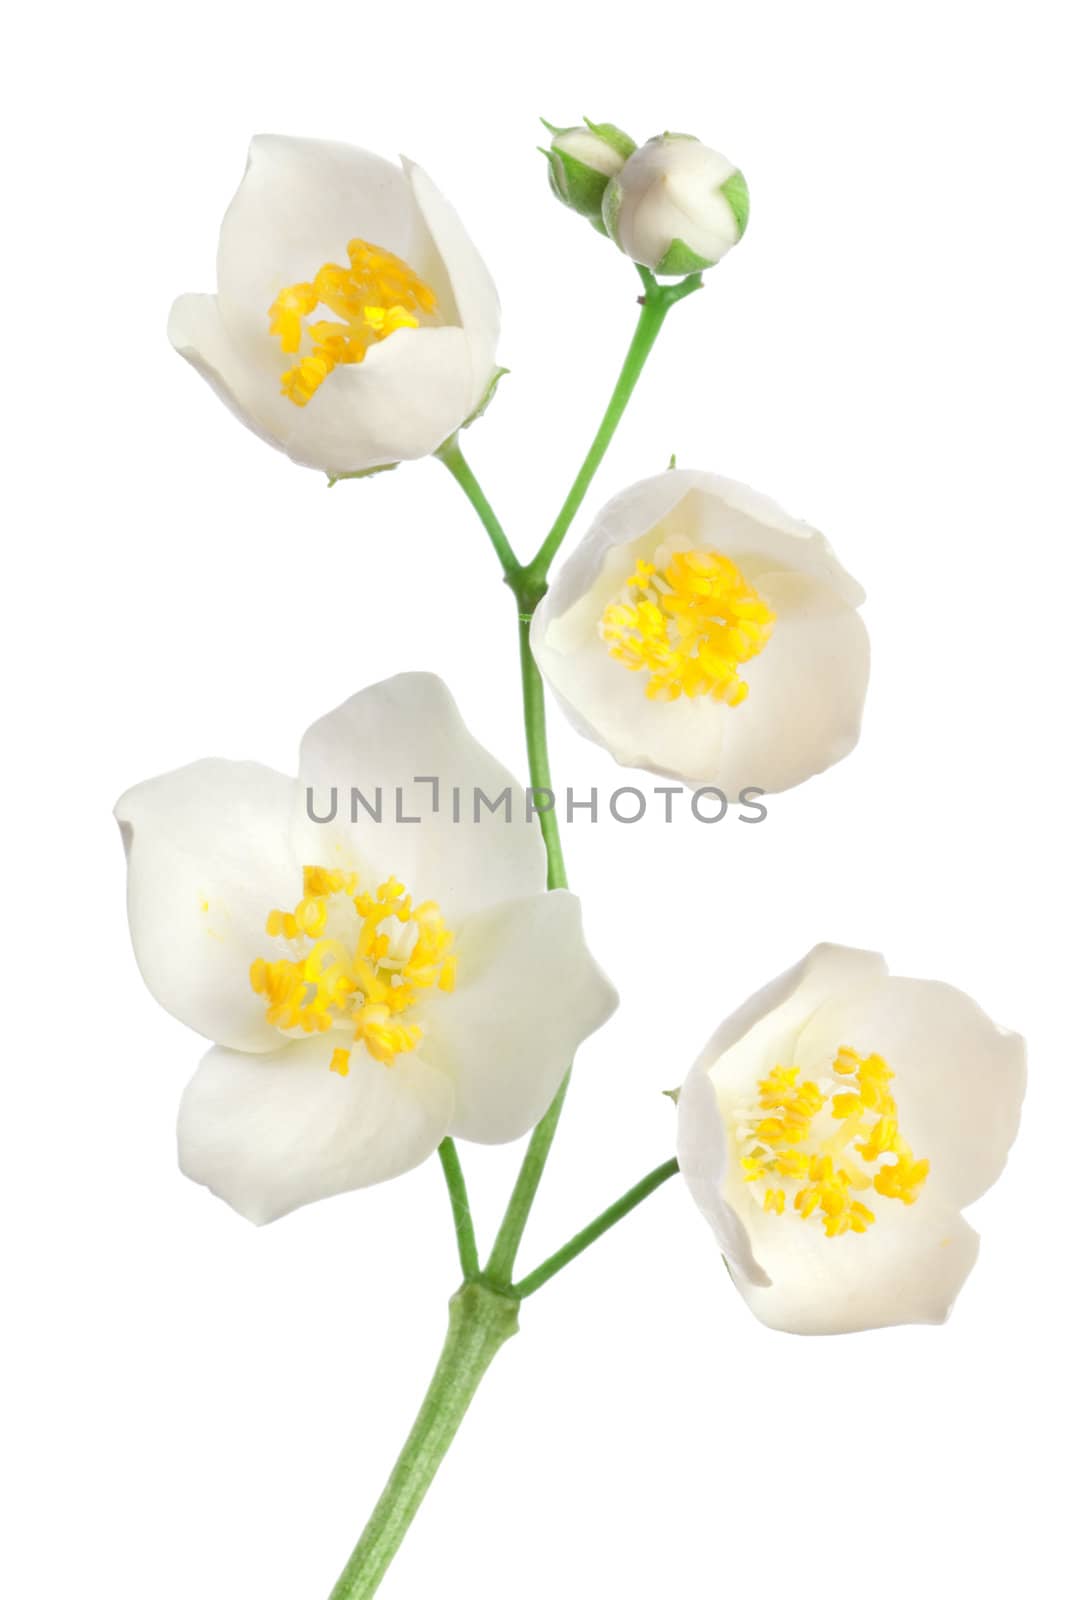 Jasmine flowers isolated on a white background